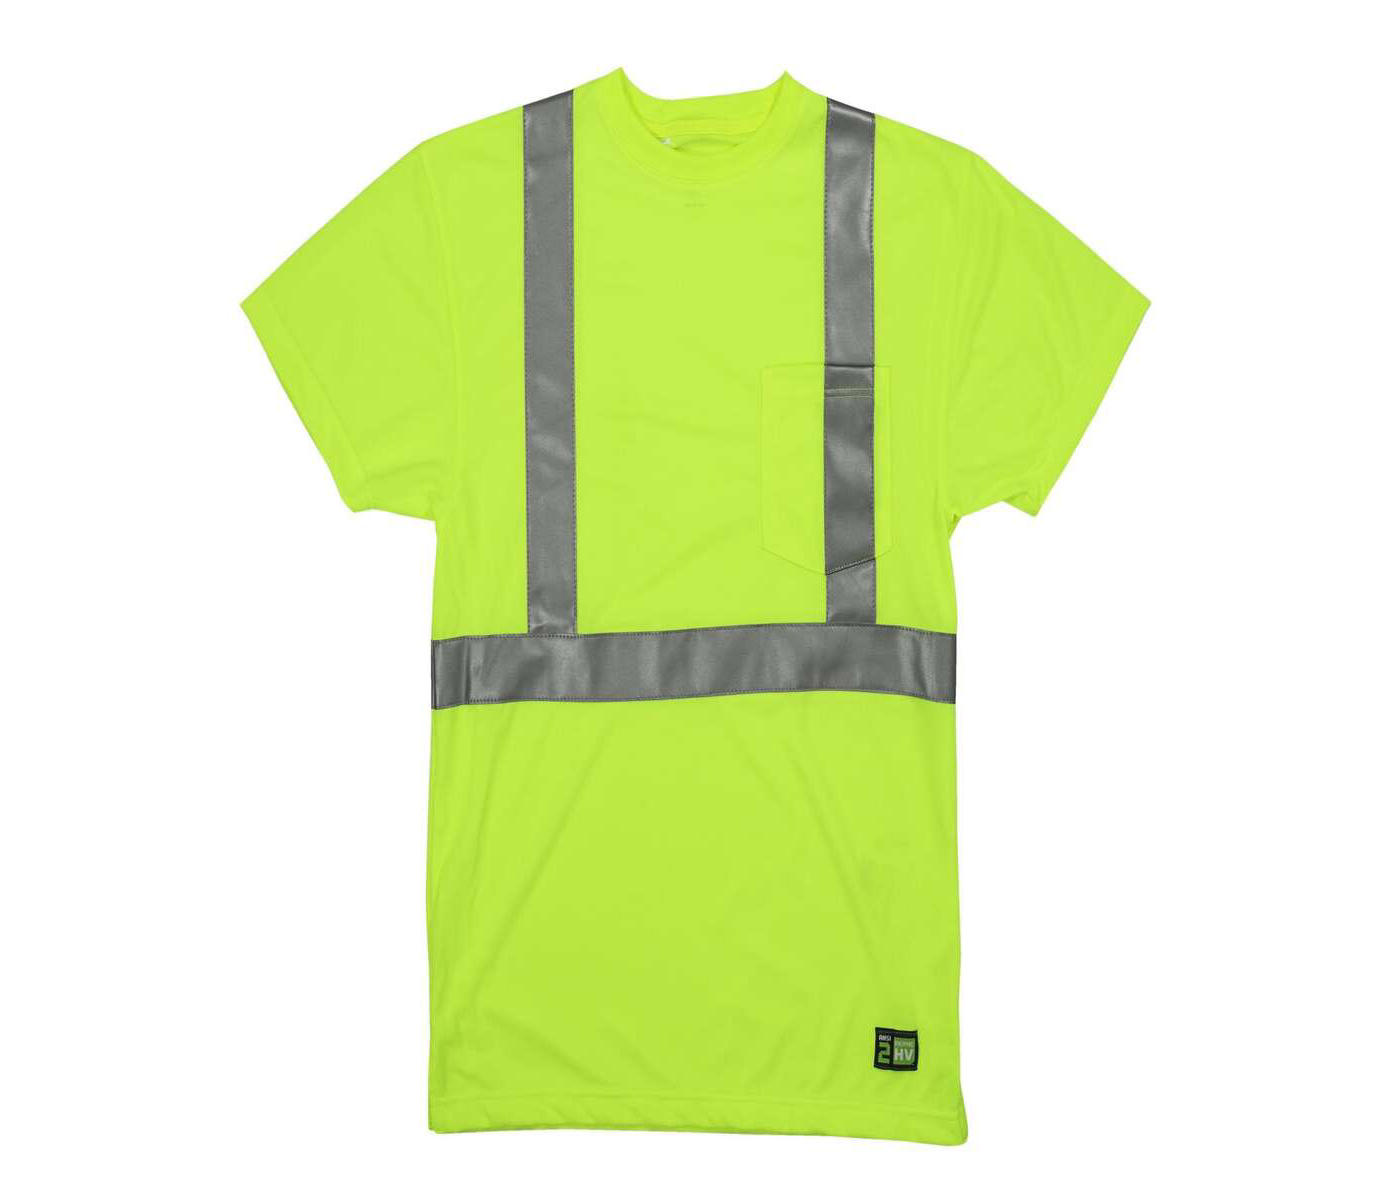 Berne Men's Hi-Vis Class 2 Performance Pocket T-Shirt - Yellow